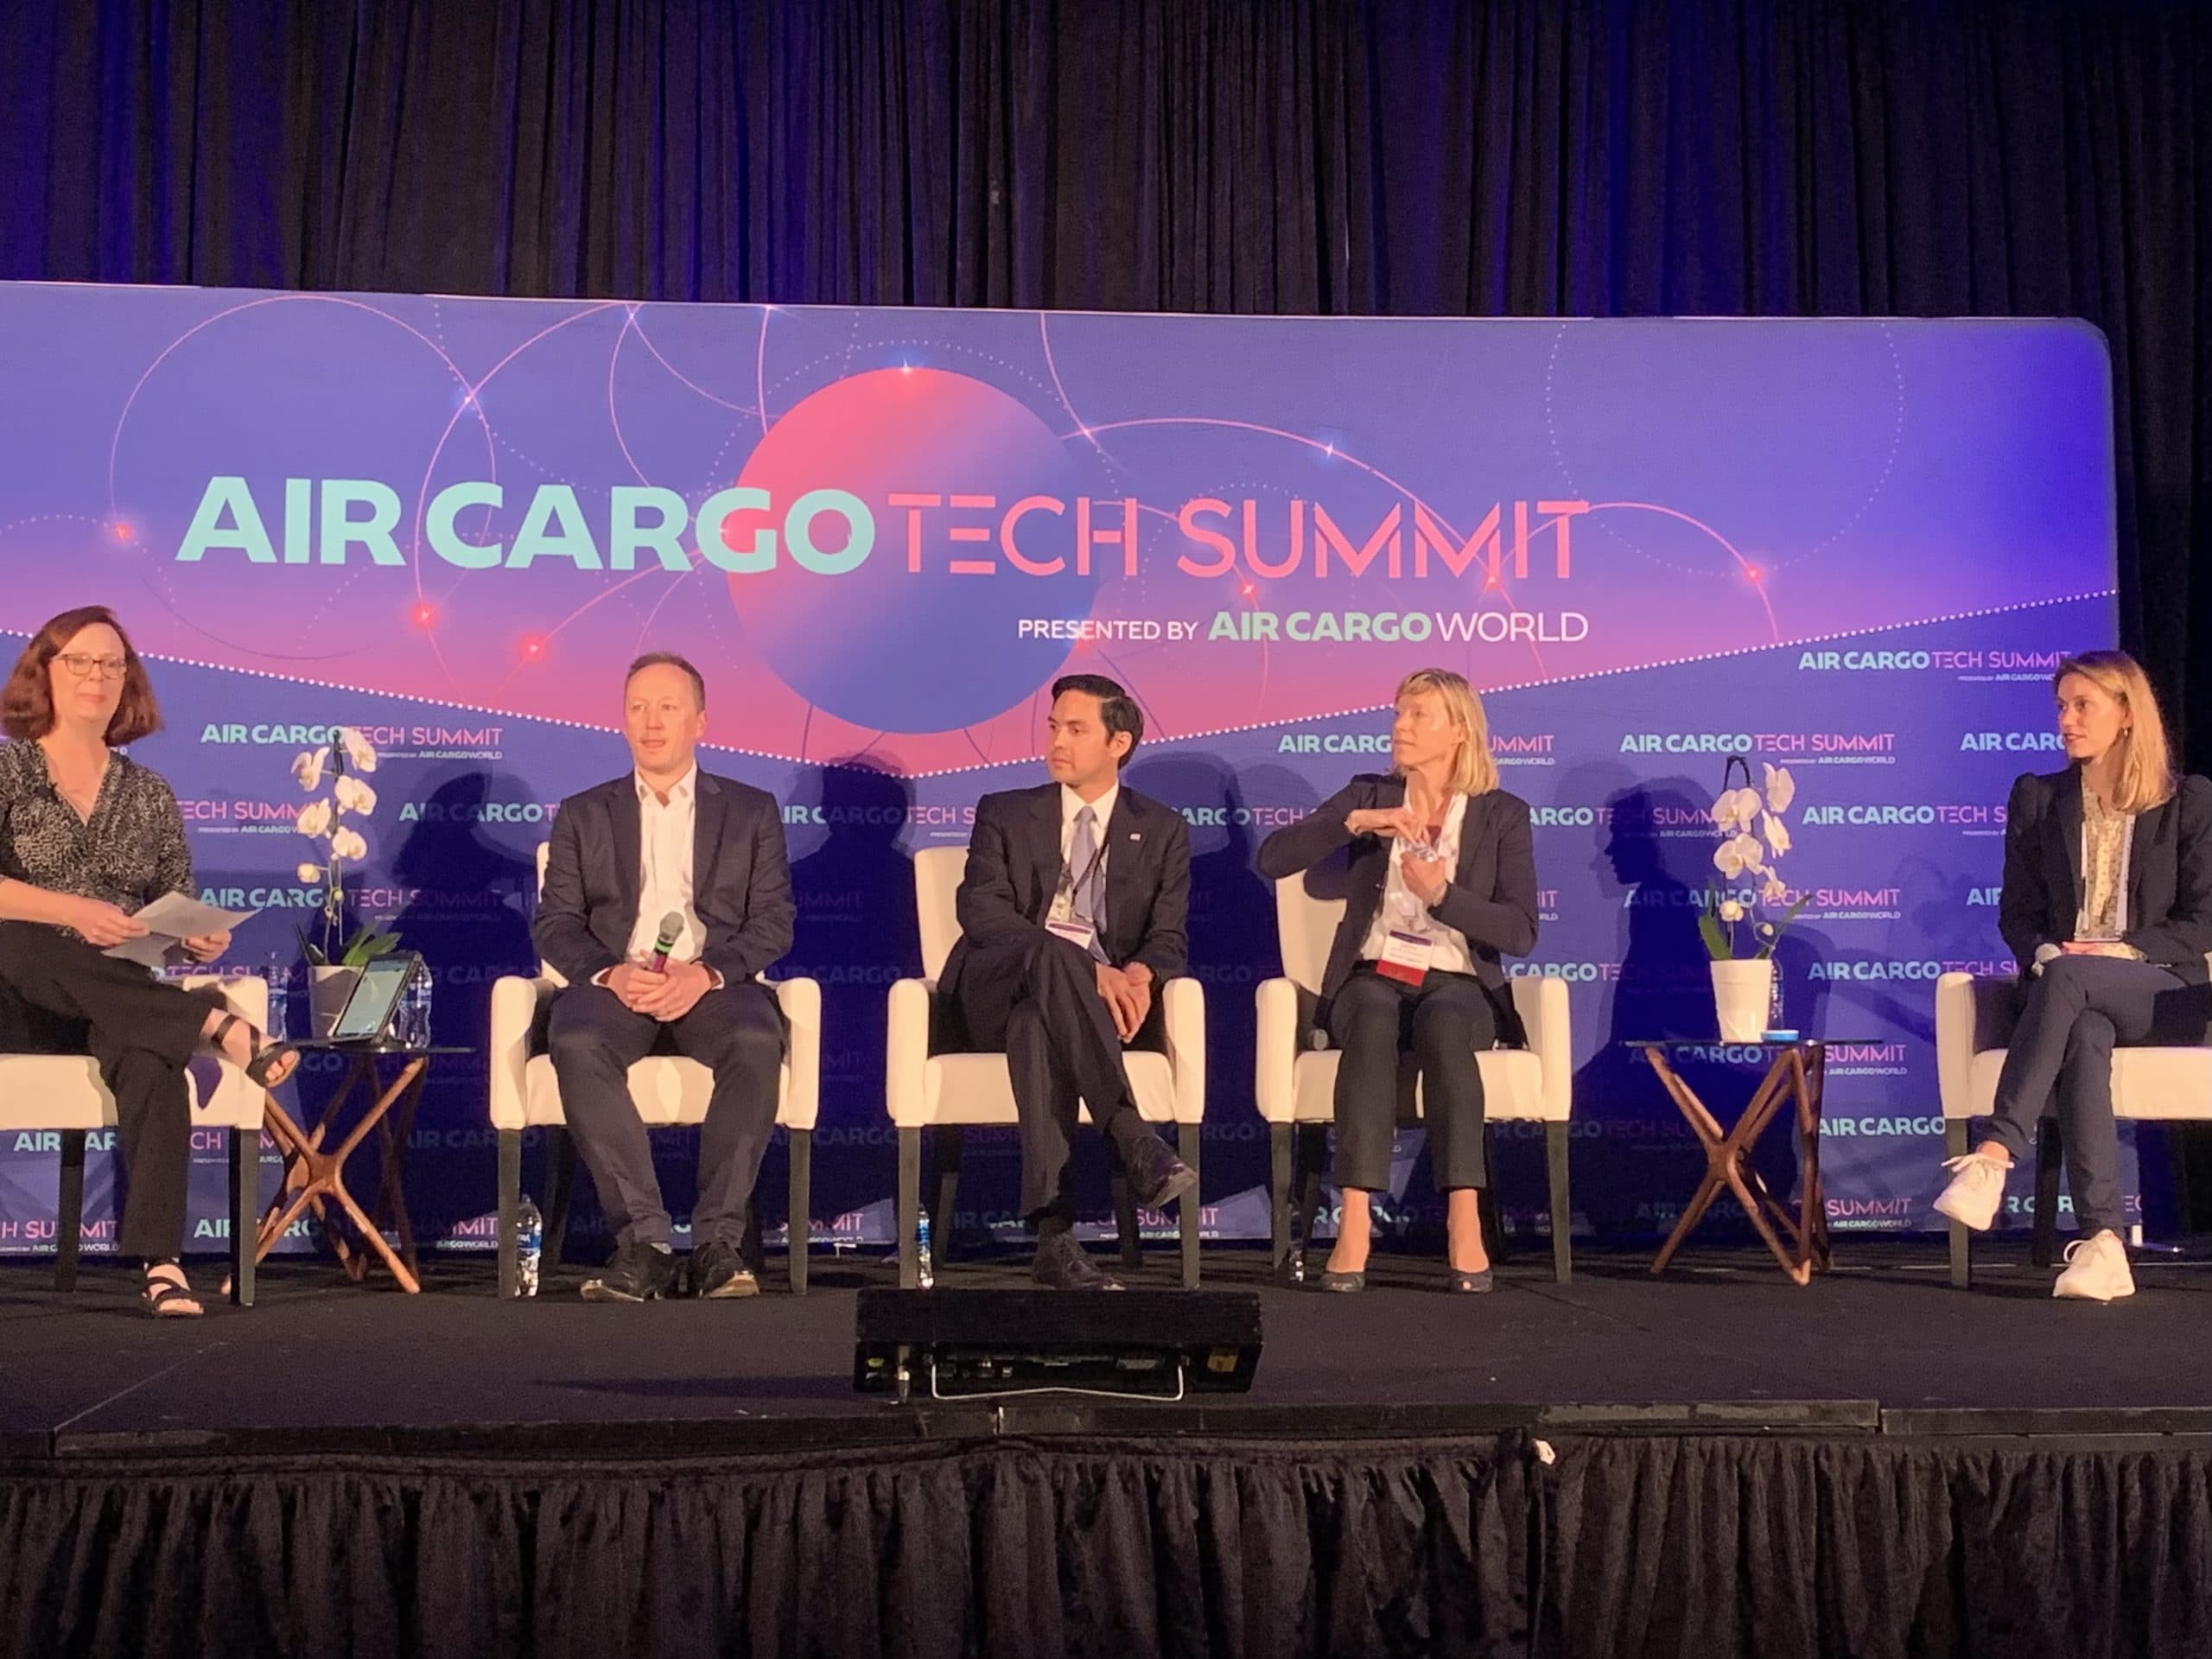 air cargo tech summit panel